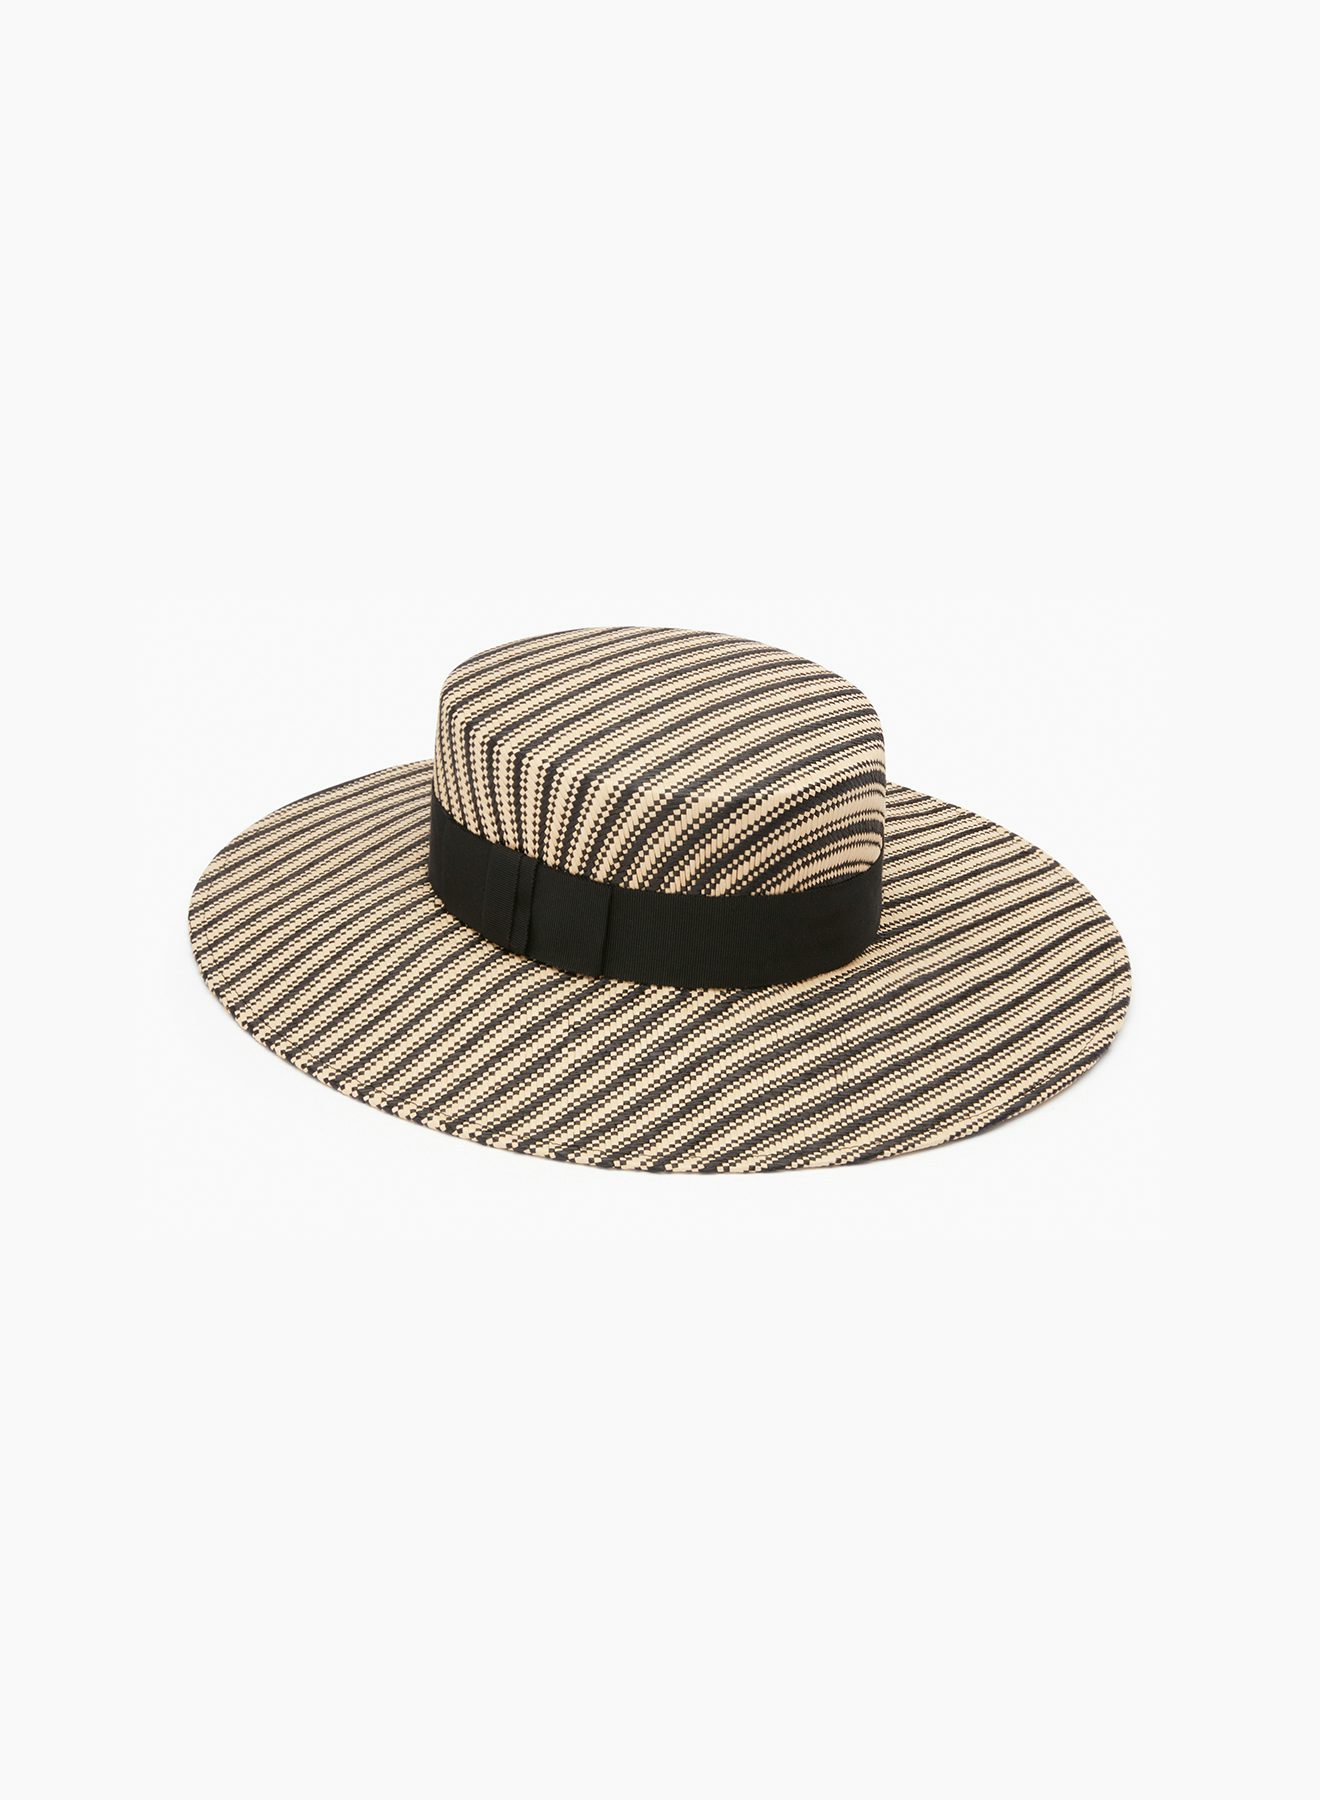 Stripped raffia canotier hat in sand and black - Nina Ricci